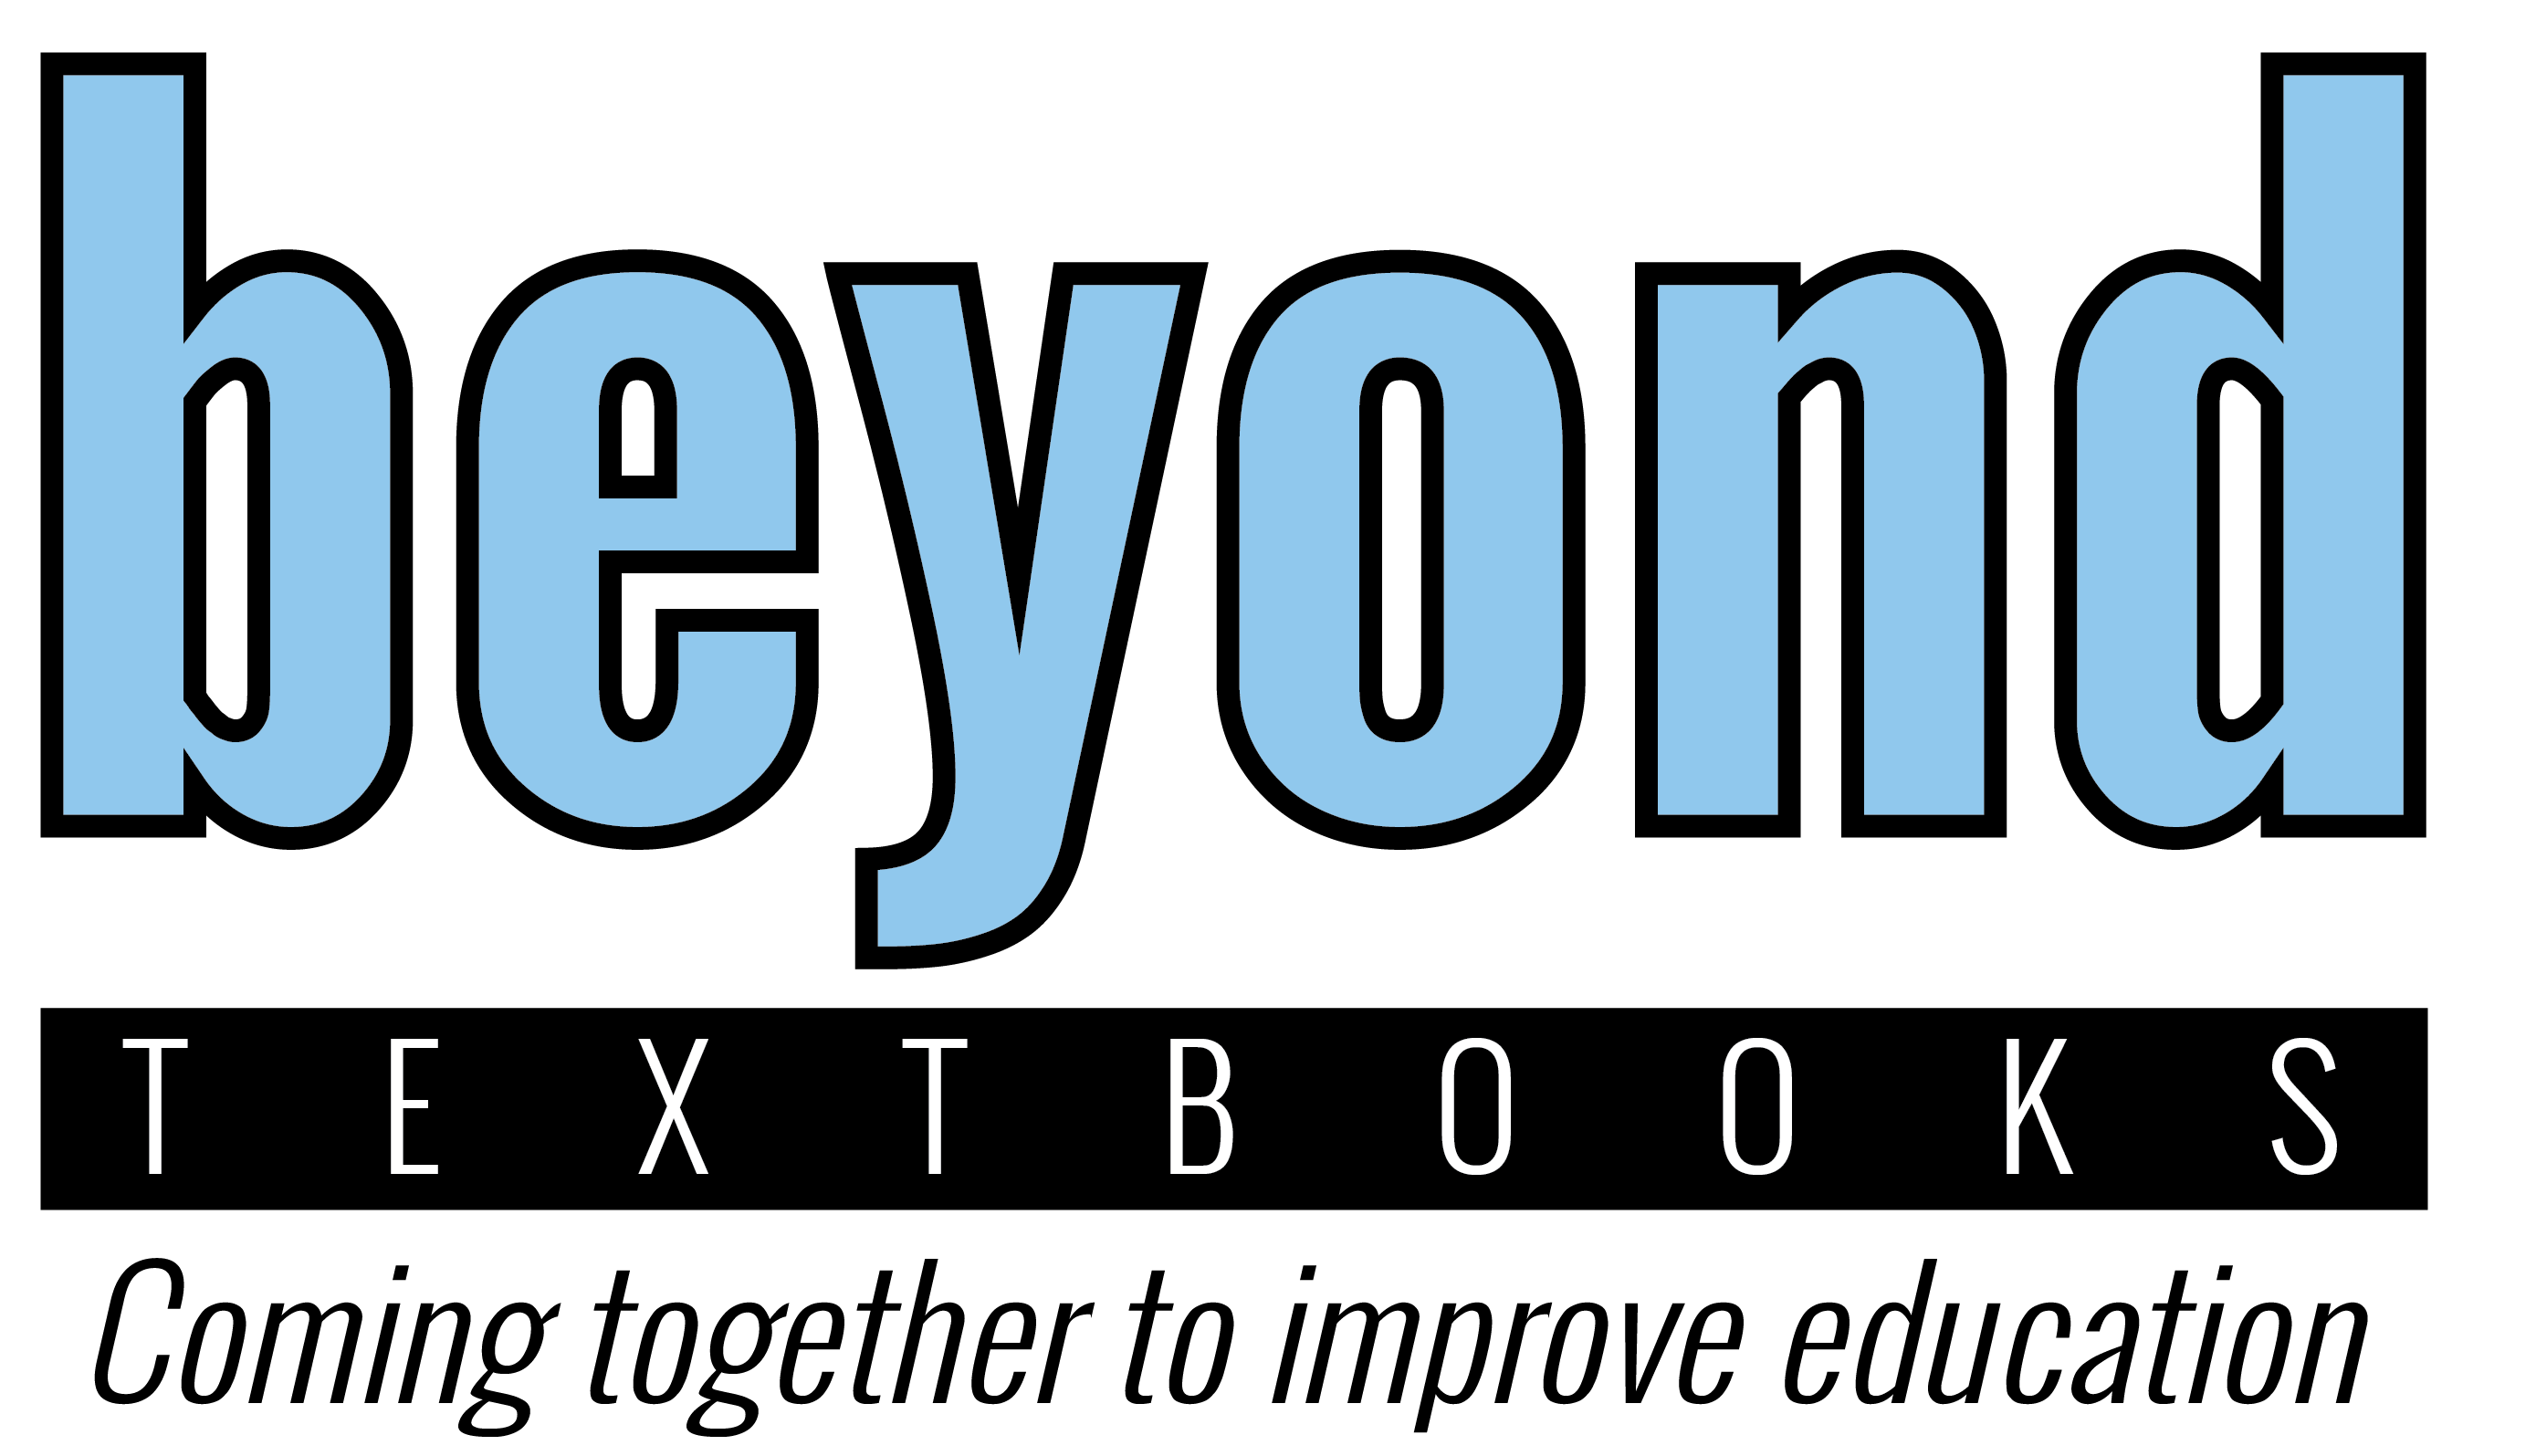 Beyond Textbooks